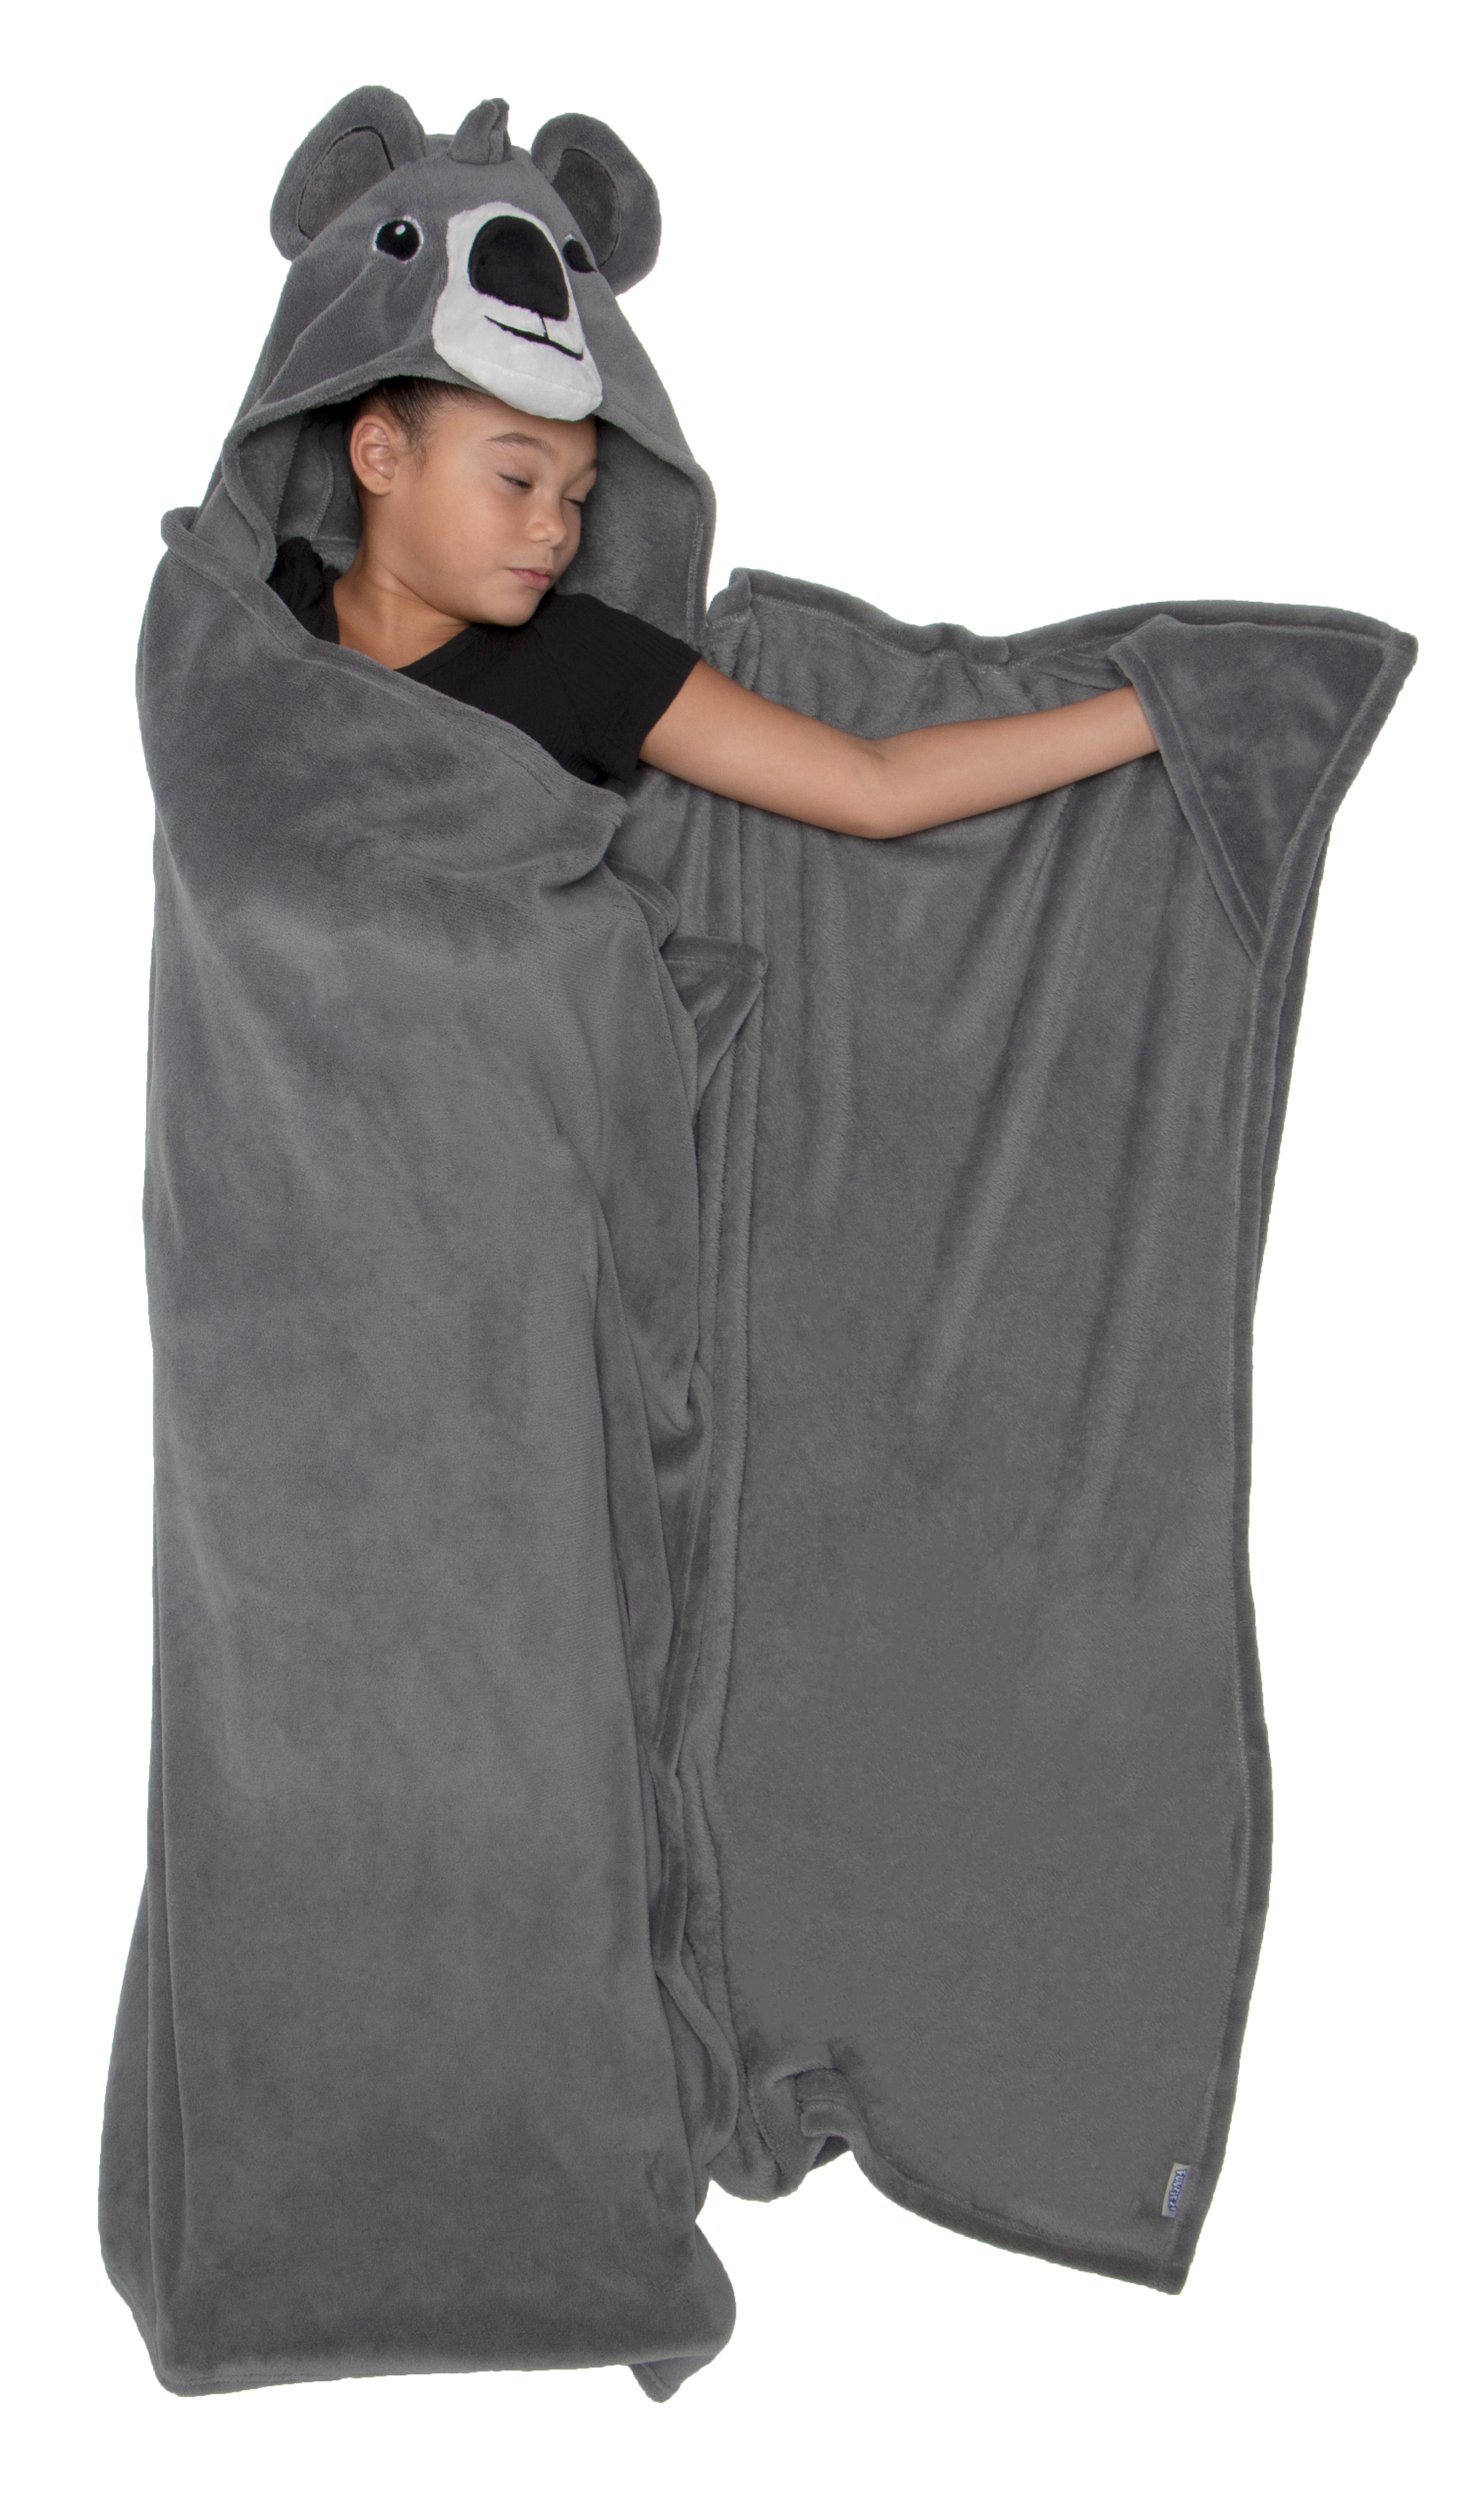 50x40 Inch for Kids Didrika Avatar The Last Airbender Hoodie Blanket Plush Ultra Soft Plush Throw Blanket Boys Cloak Wearable Blankets Hooded Throw Wrap